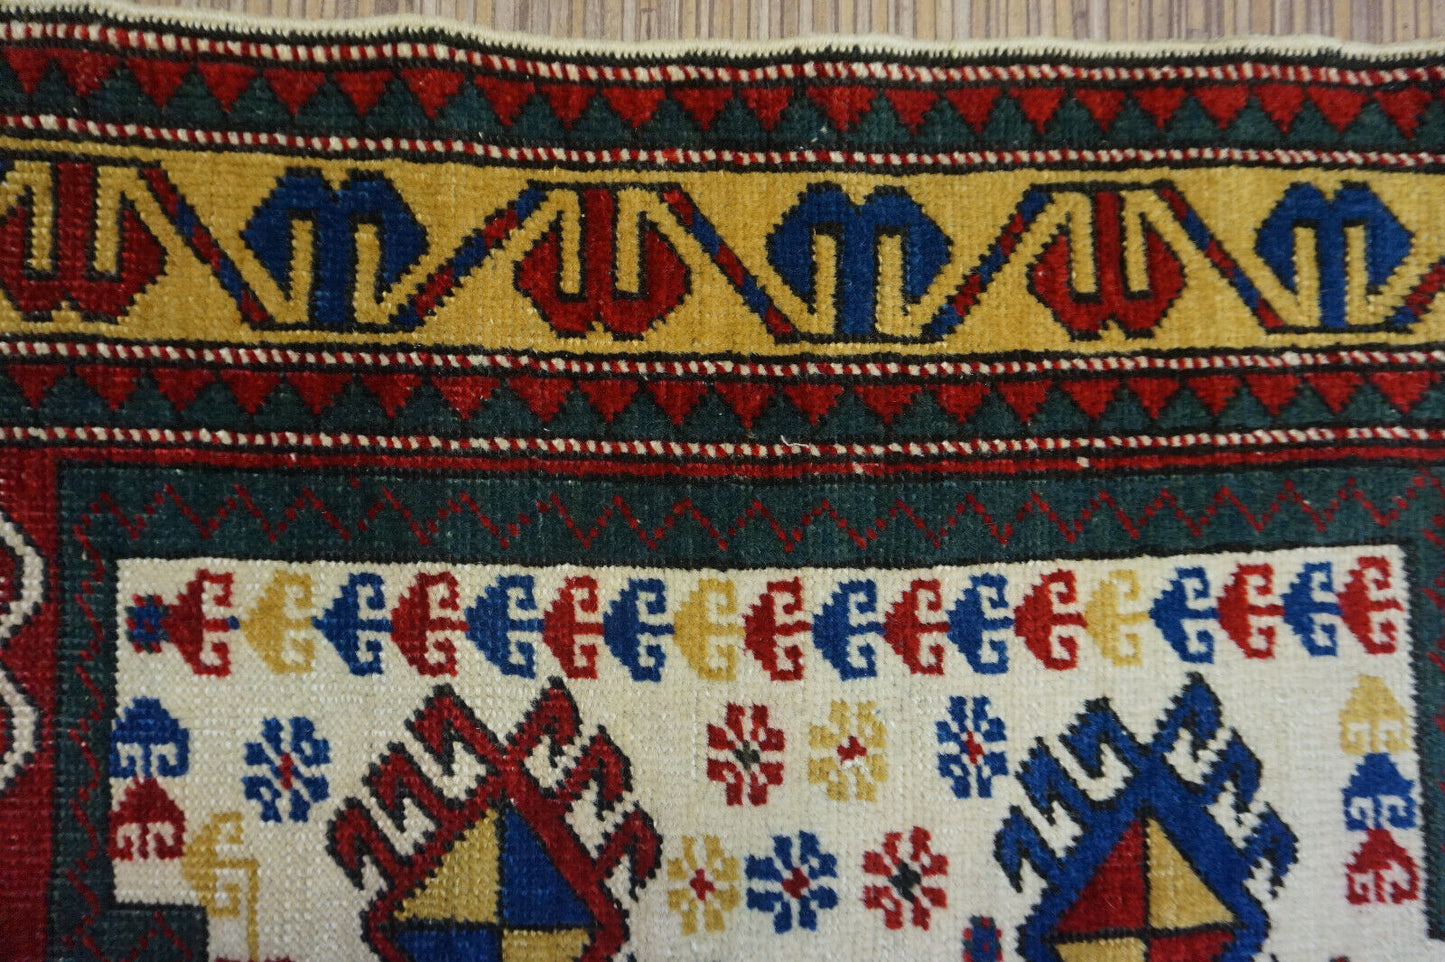 Side view of the Handmade Antique Caucasian Kazak Prayer Rug demonstrating its wool material